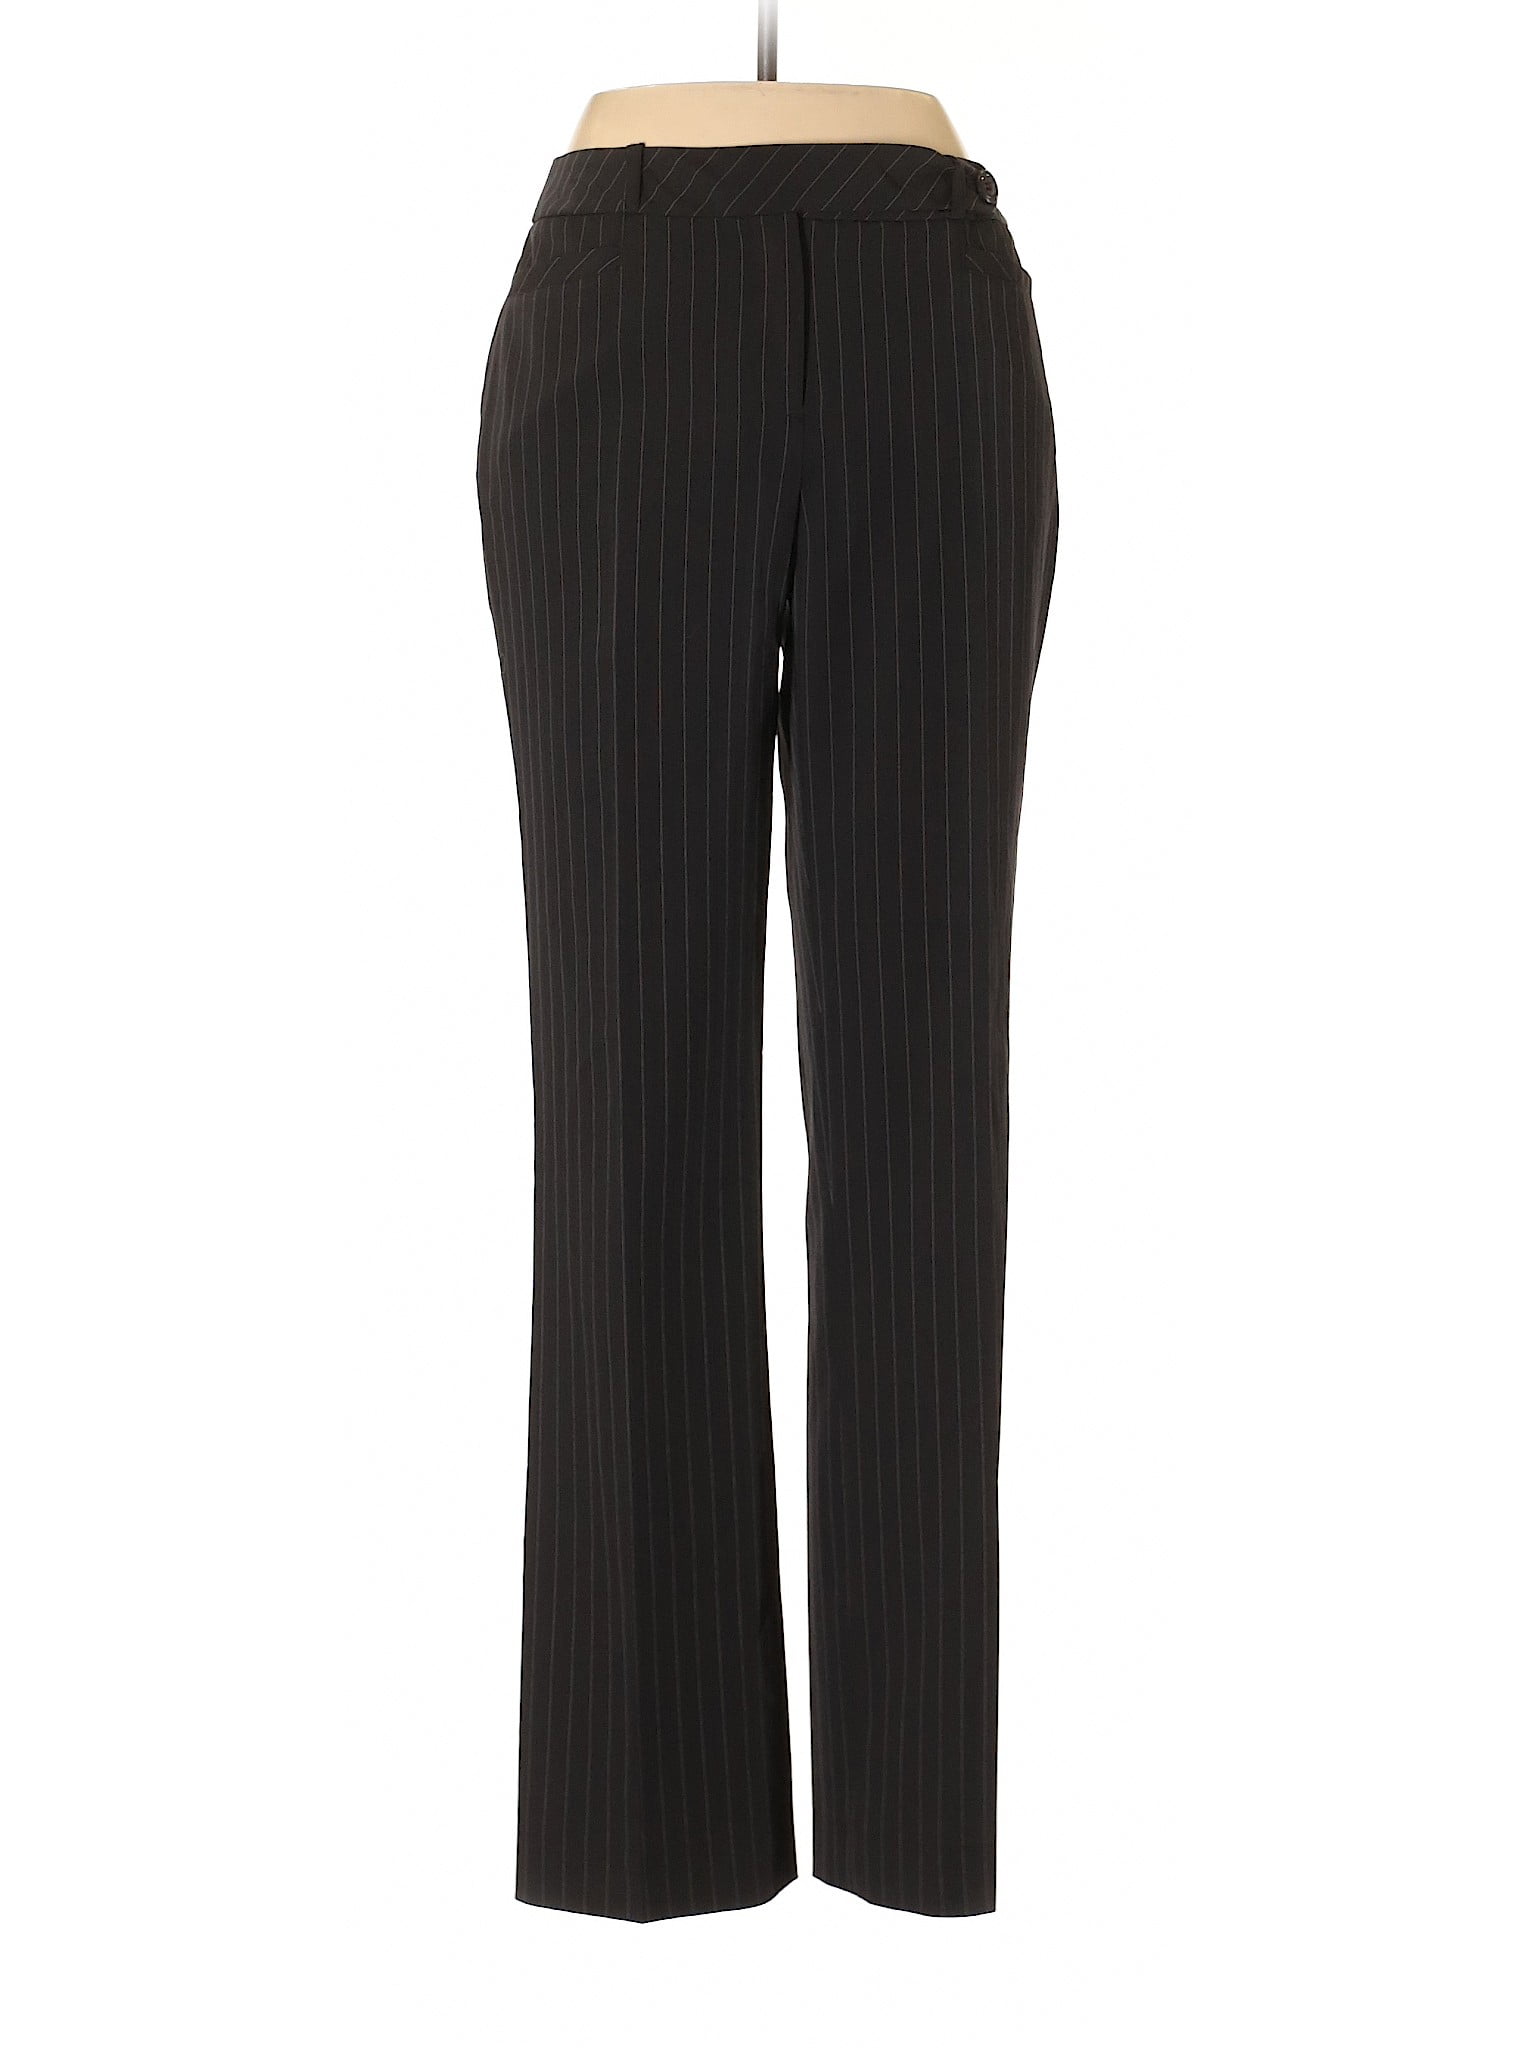 Dalia - Pre-Owned Dalia Women's Size 6 Dress Pants - Walmart.com ...